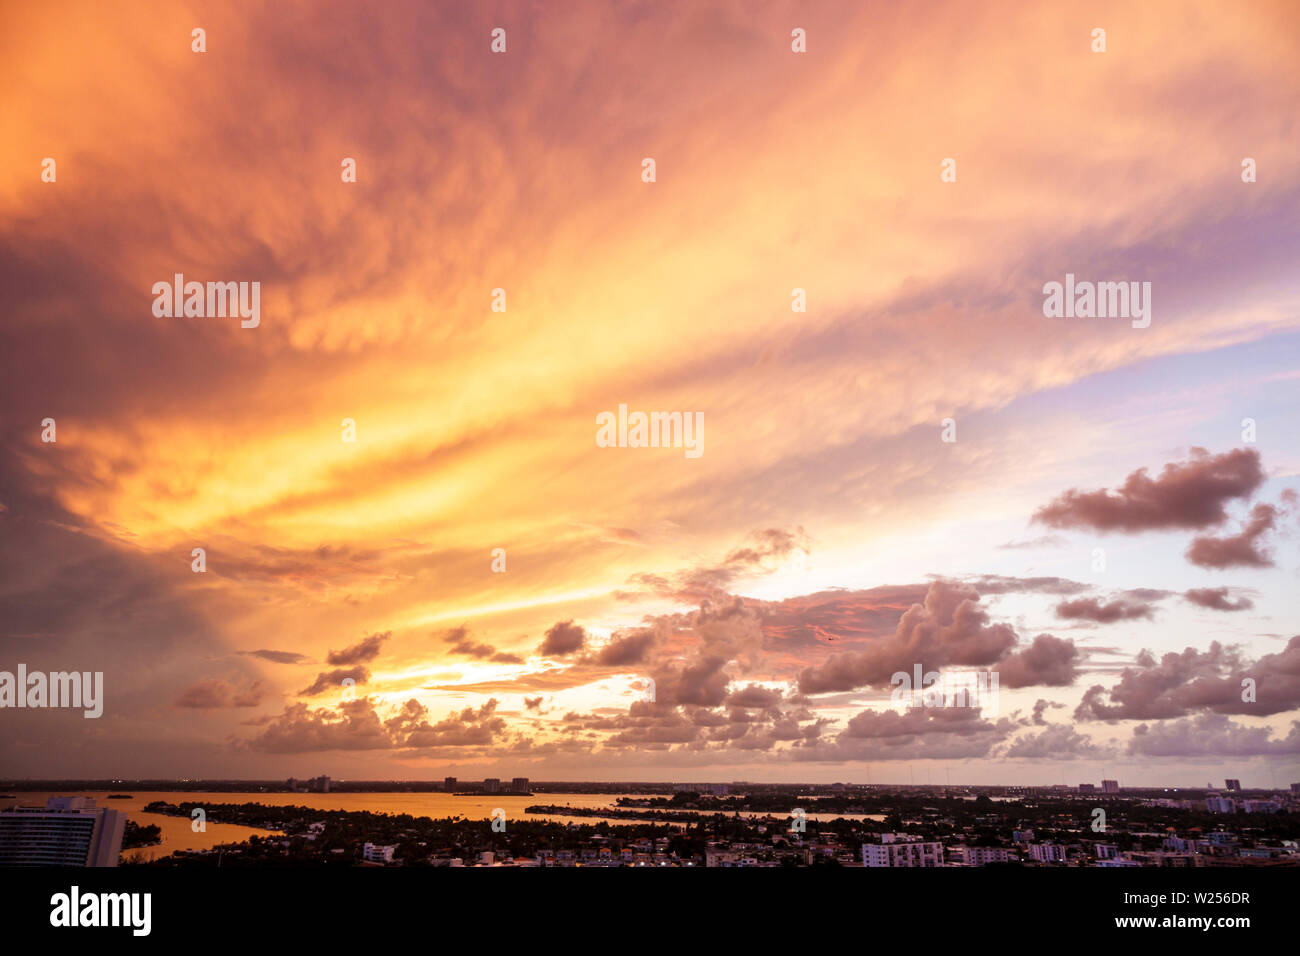 Miami Beach Florida,North Beach,sunset setting sun clouds sky,Biscayne Bay,amber,FL190531002 Stock Photo